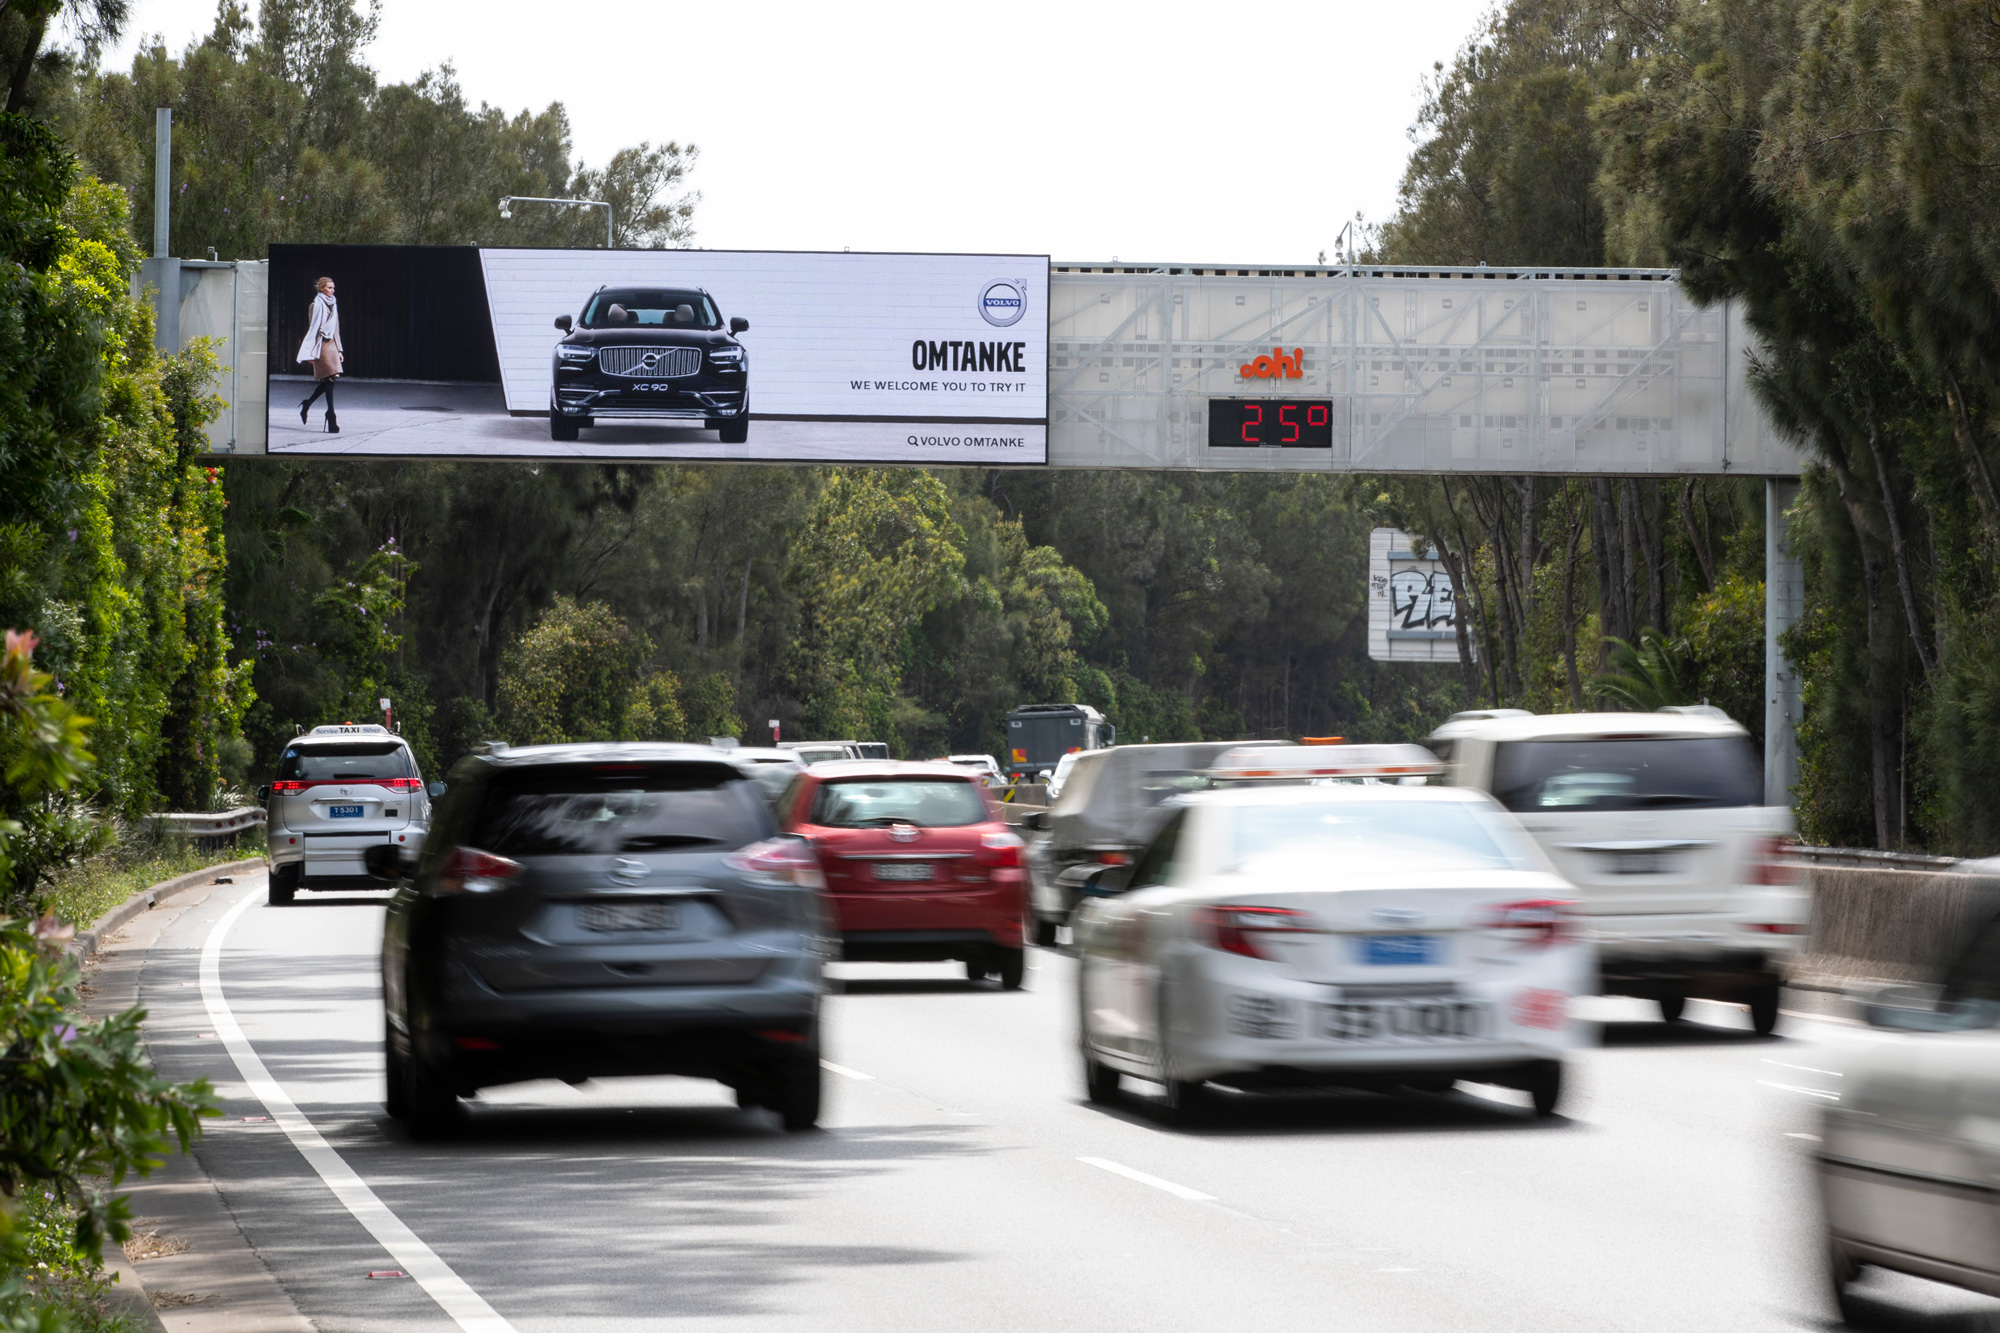 Volvo billboard advertising on road